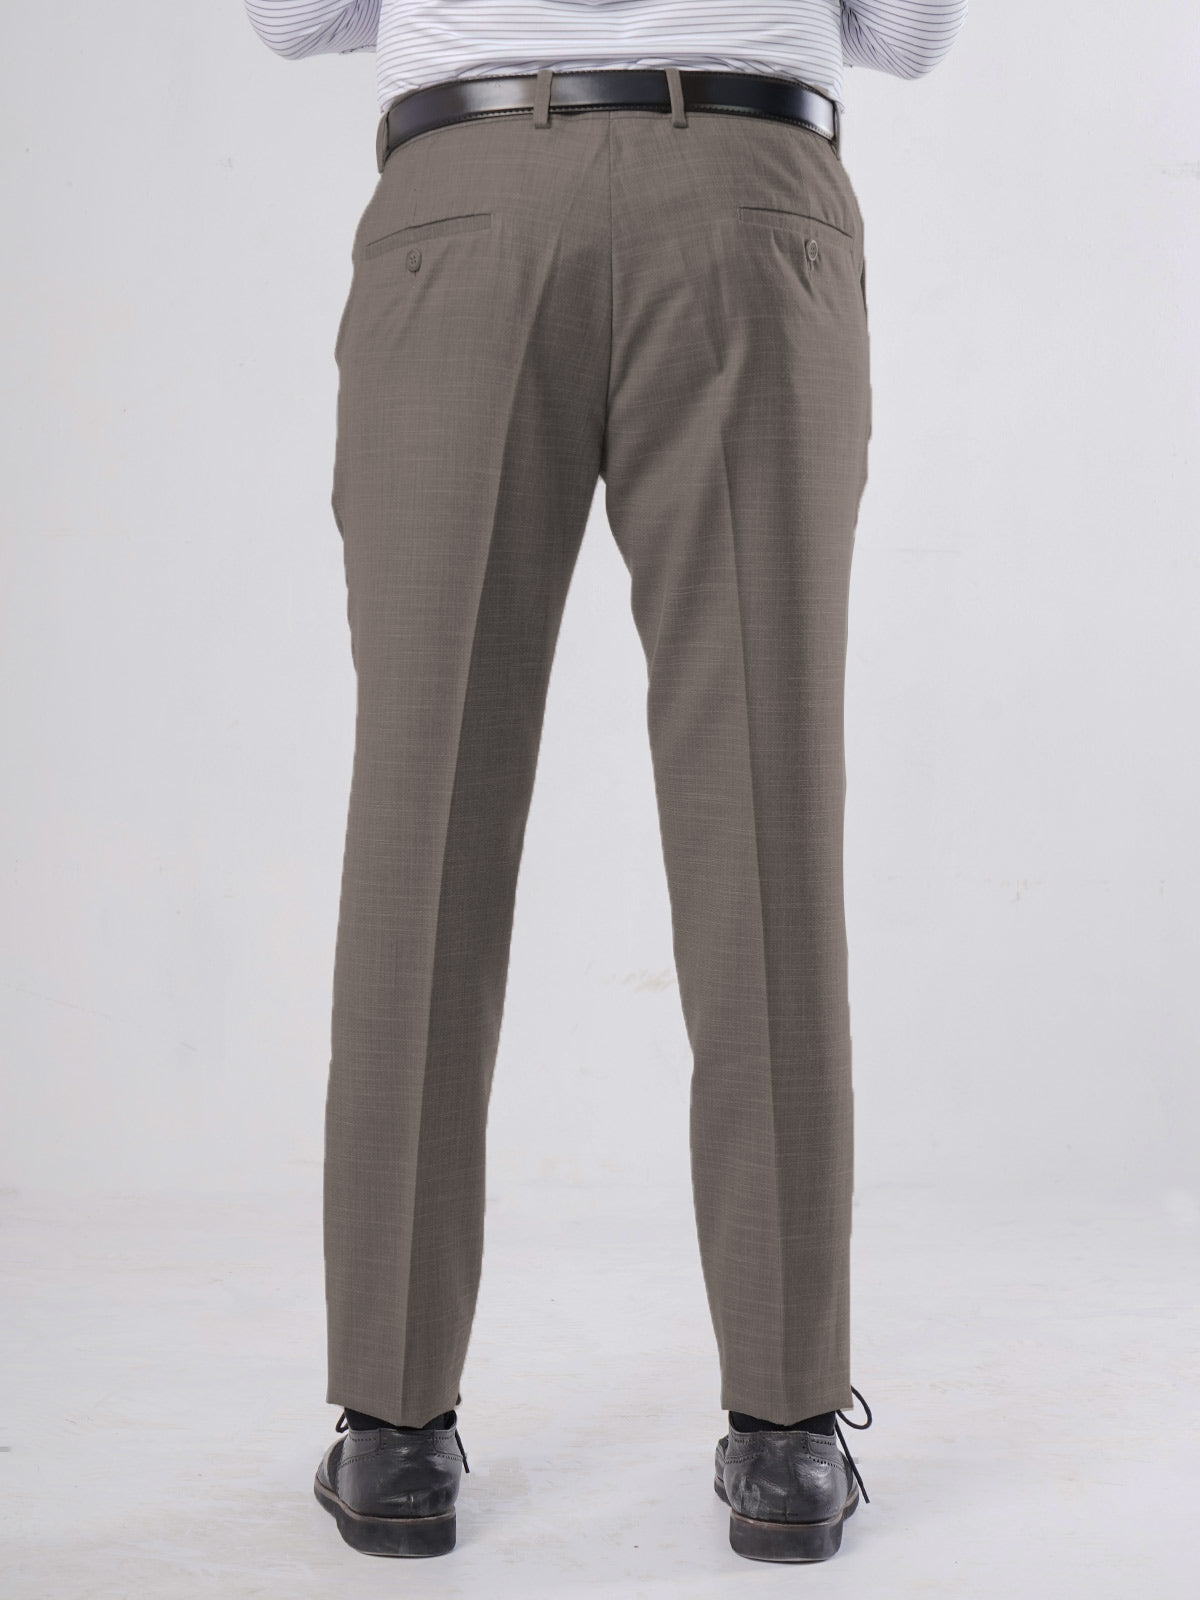 Light Brown Self Executive Formal Dress Trouser (FDT-119)